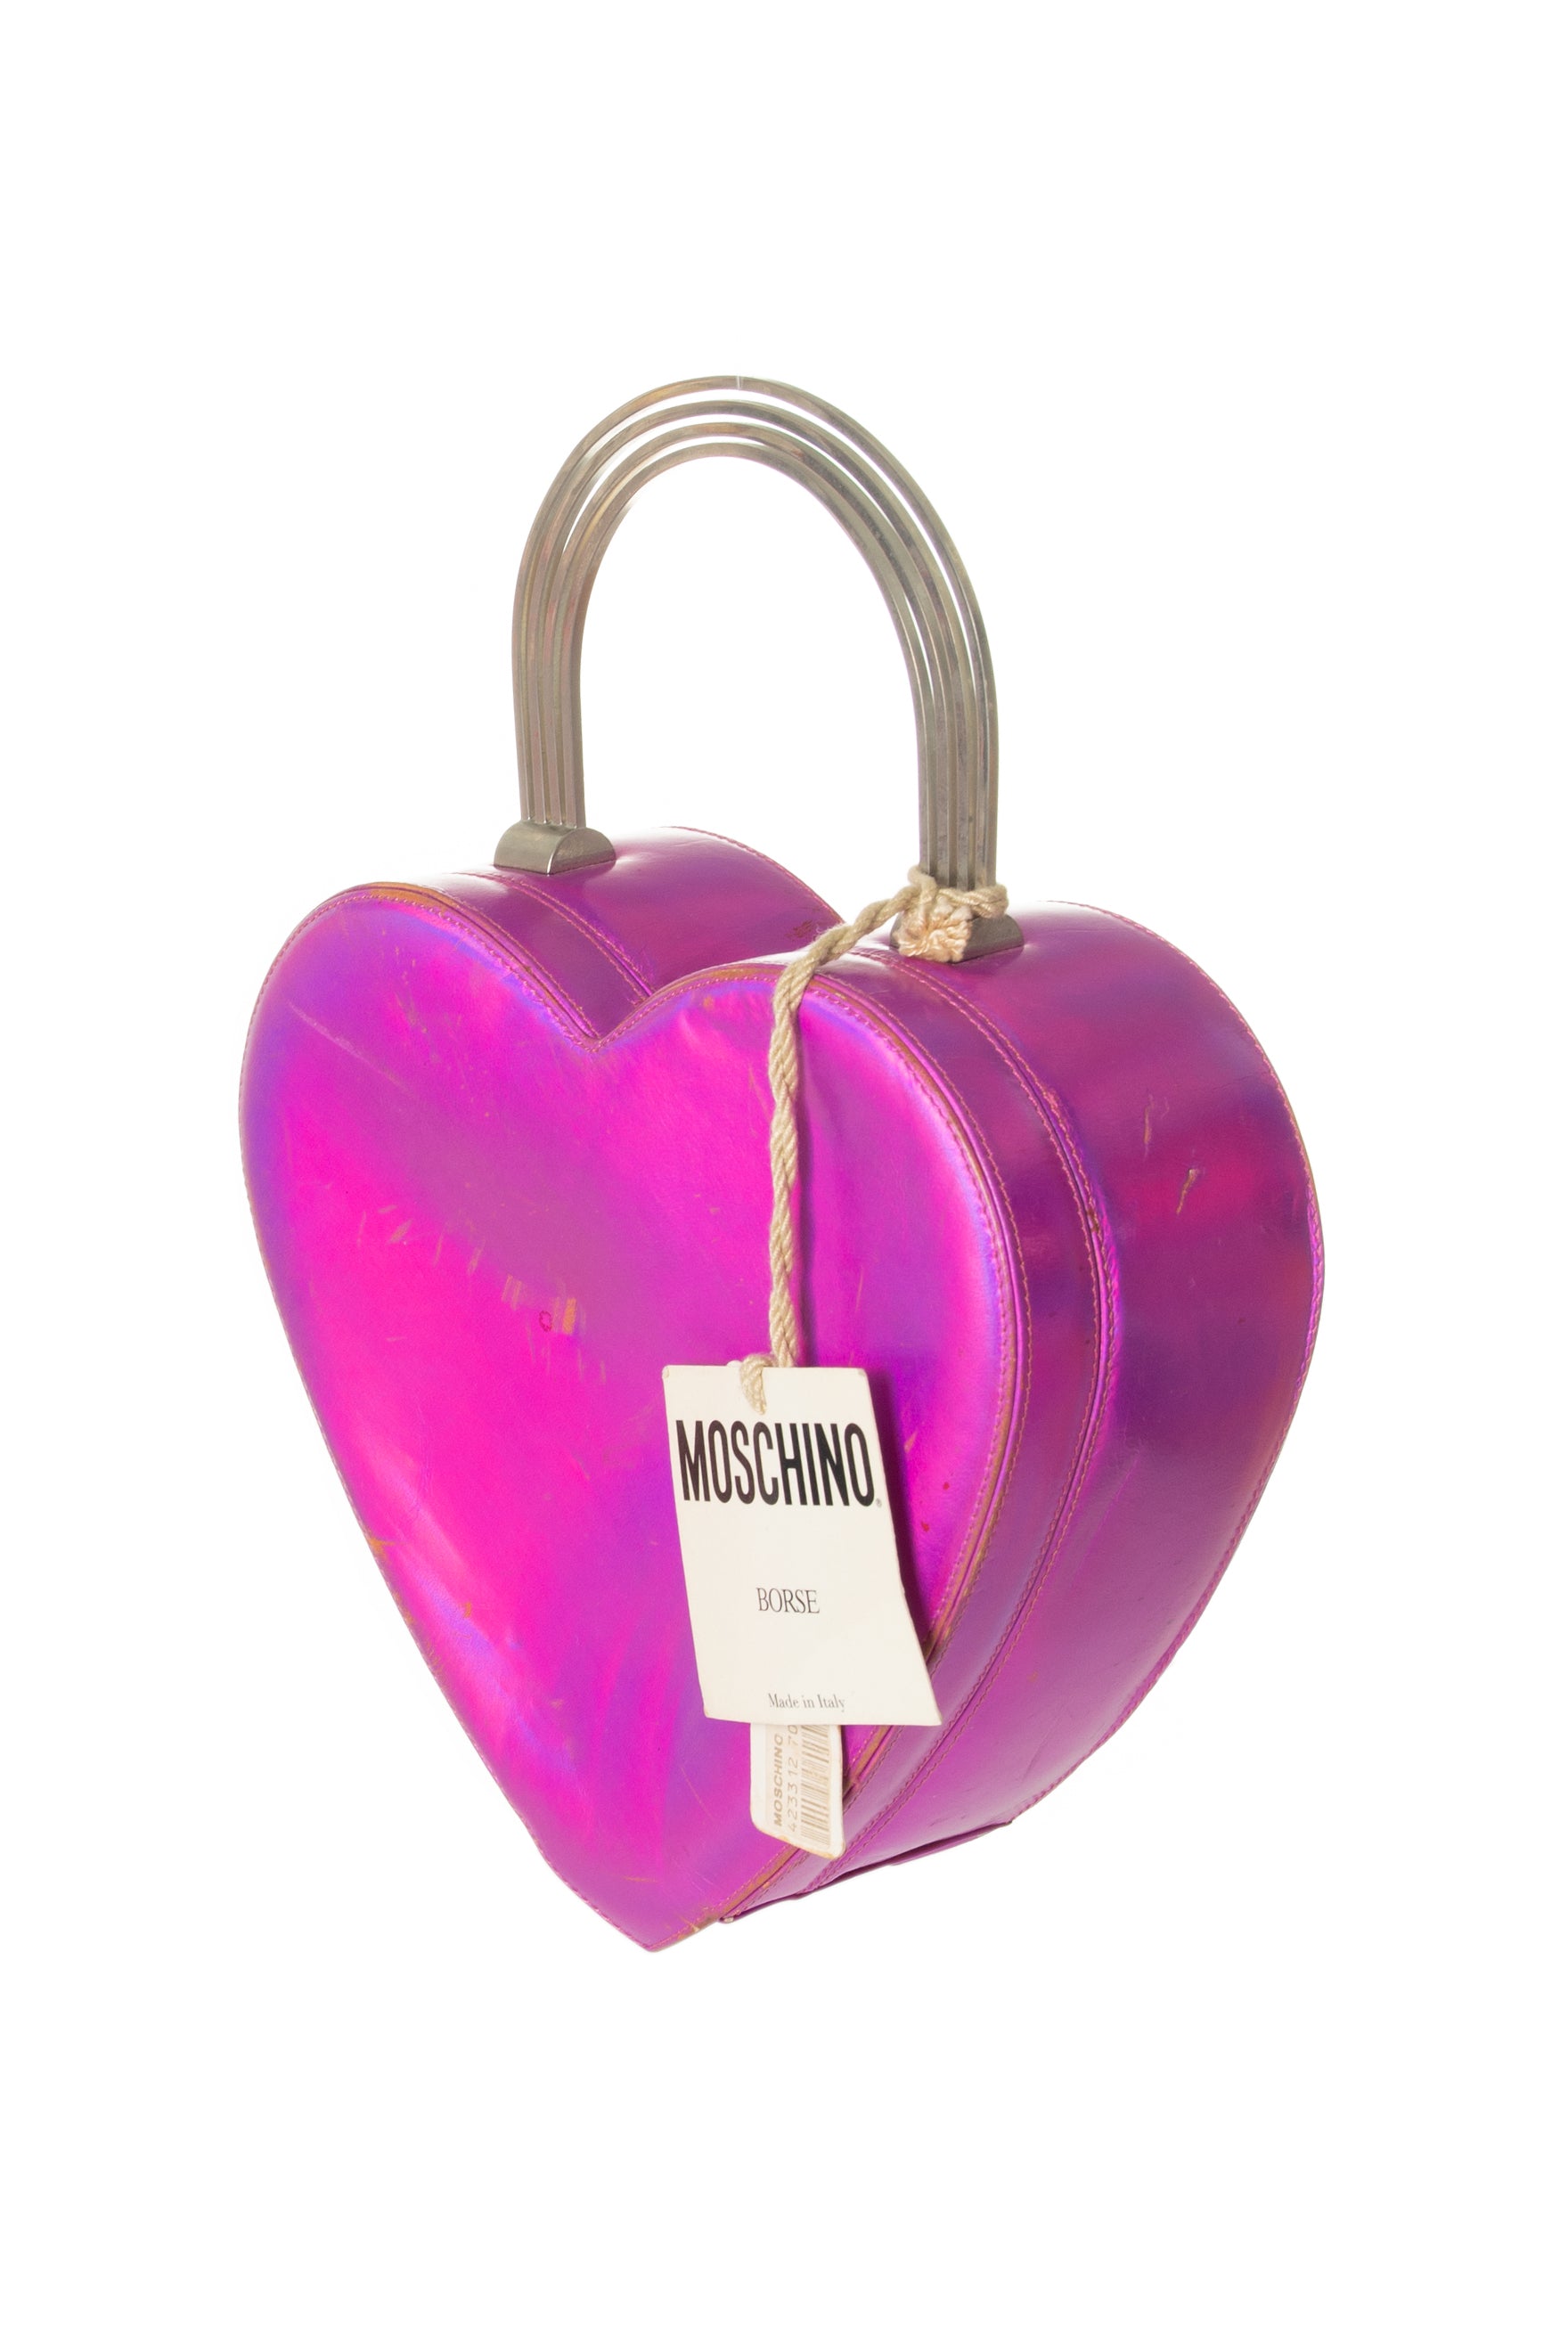 IRRÉVERSIBLE — Vintage Redwall Moschino heart bag